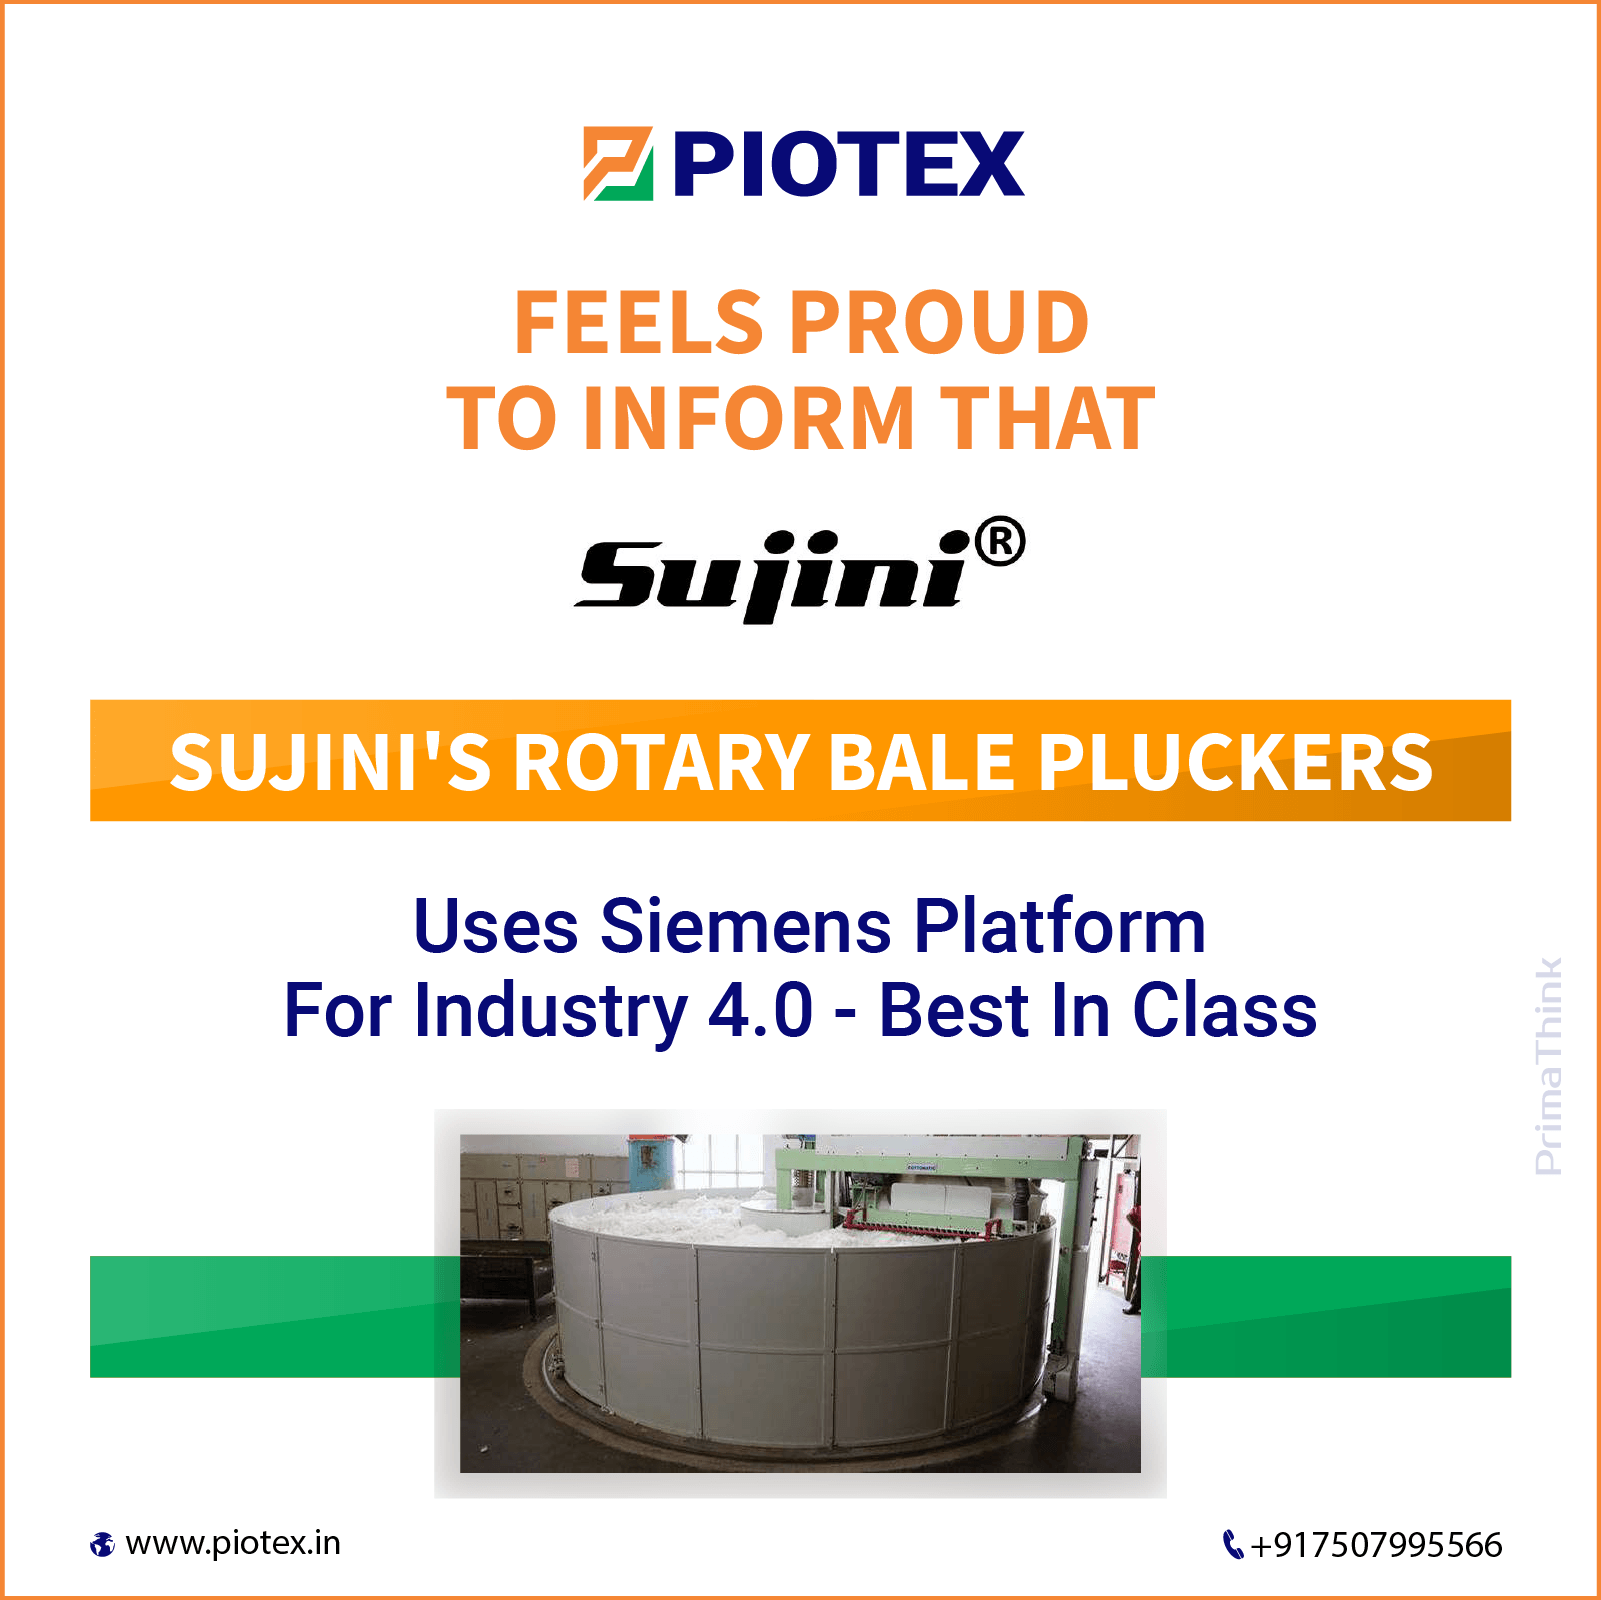 Sujini Rotary Bale Pluckers uses Siemens Platform for Industry 4.0